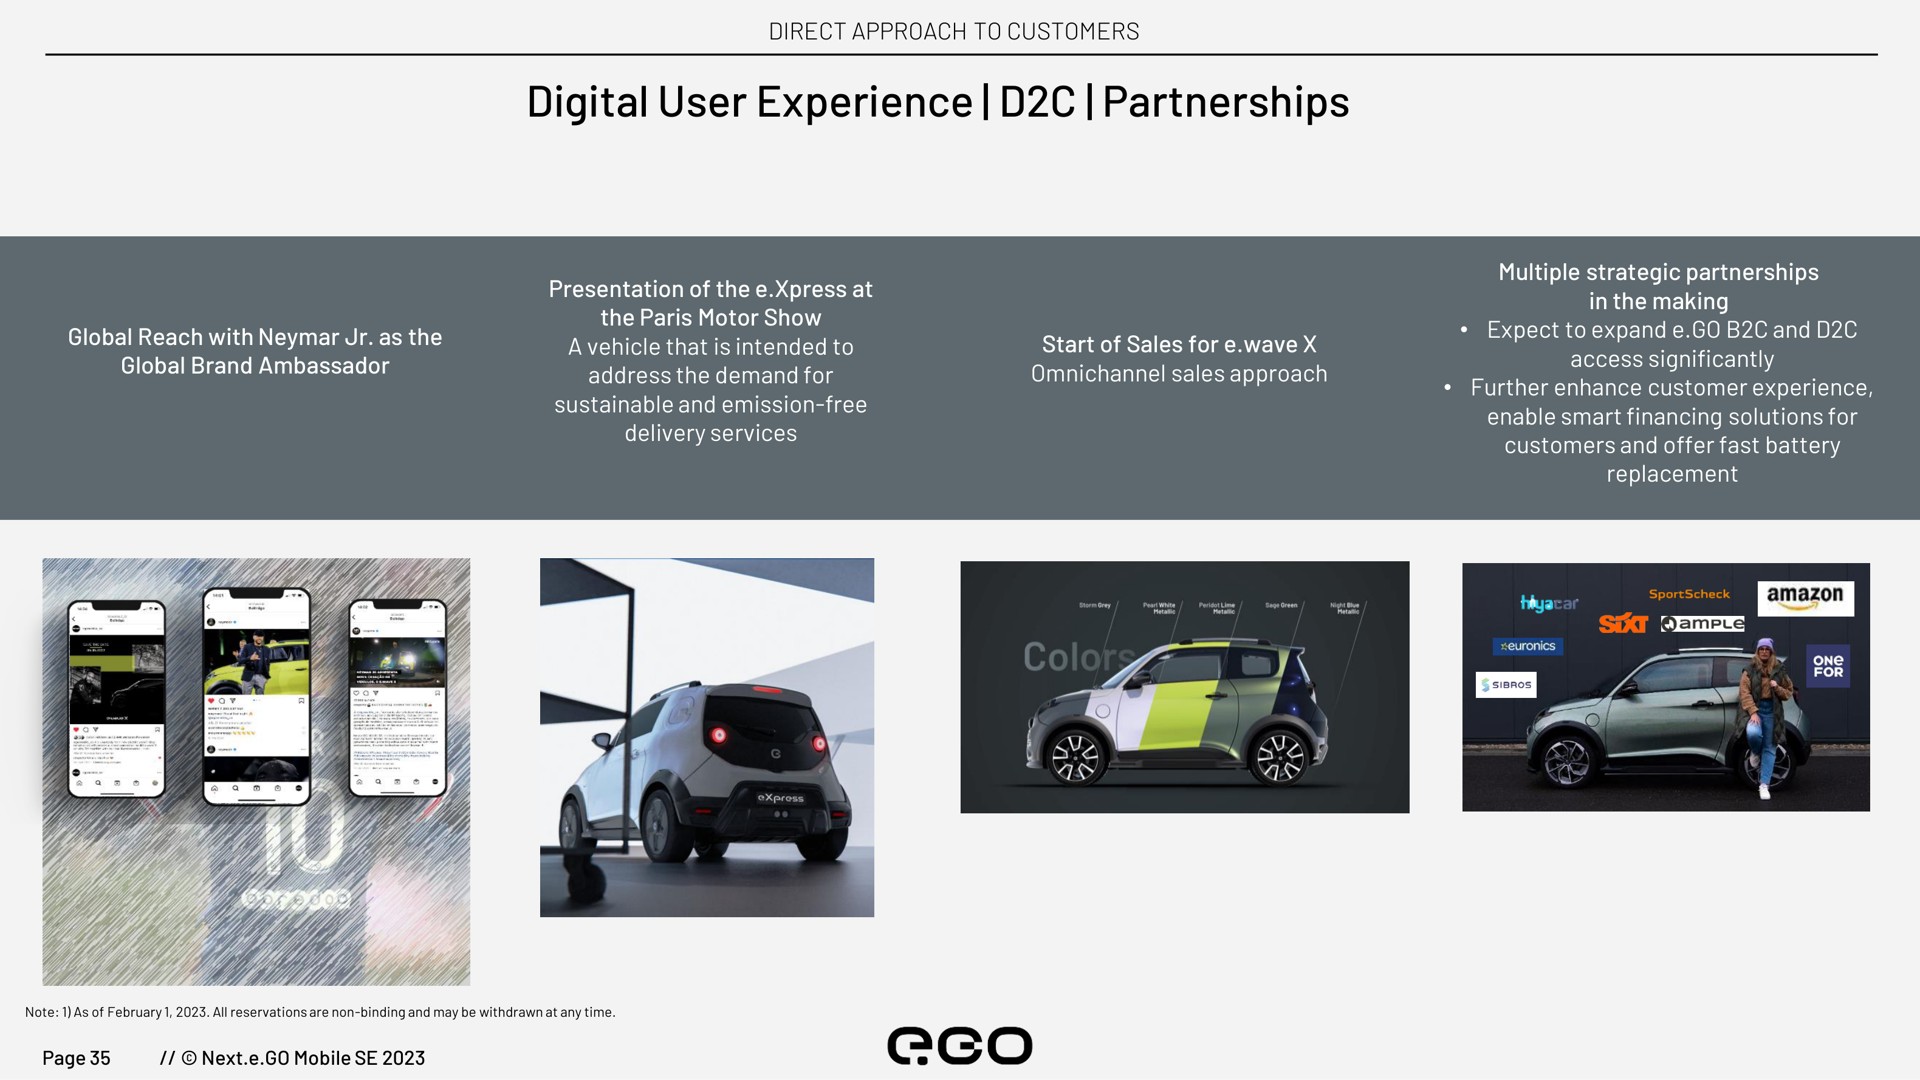 digital user experience partnerships | Next.e.GO